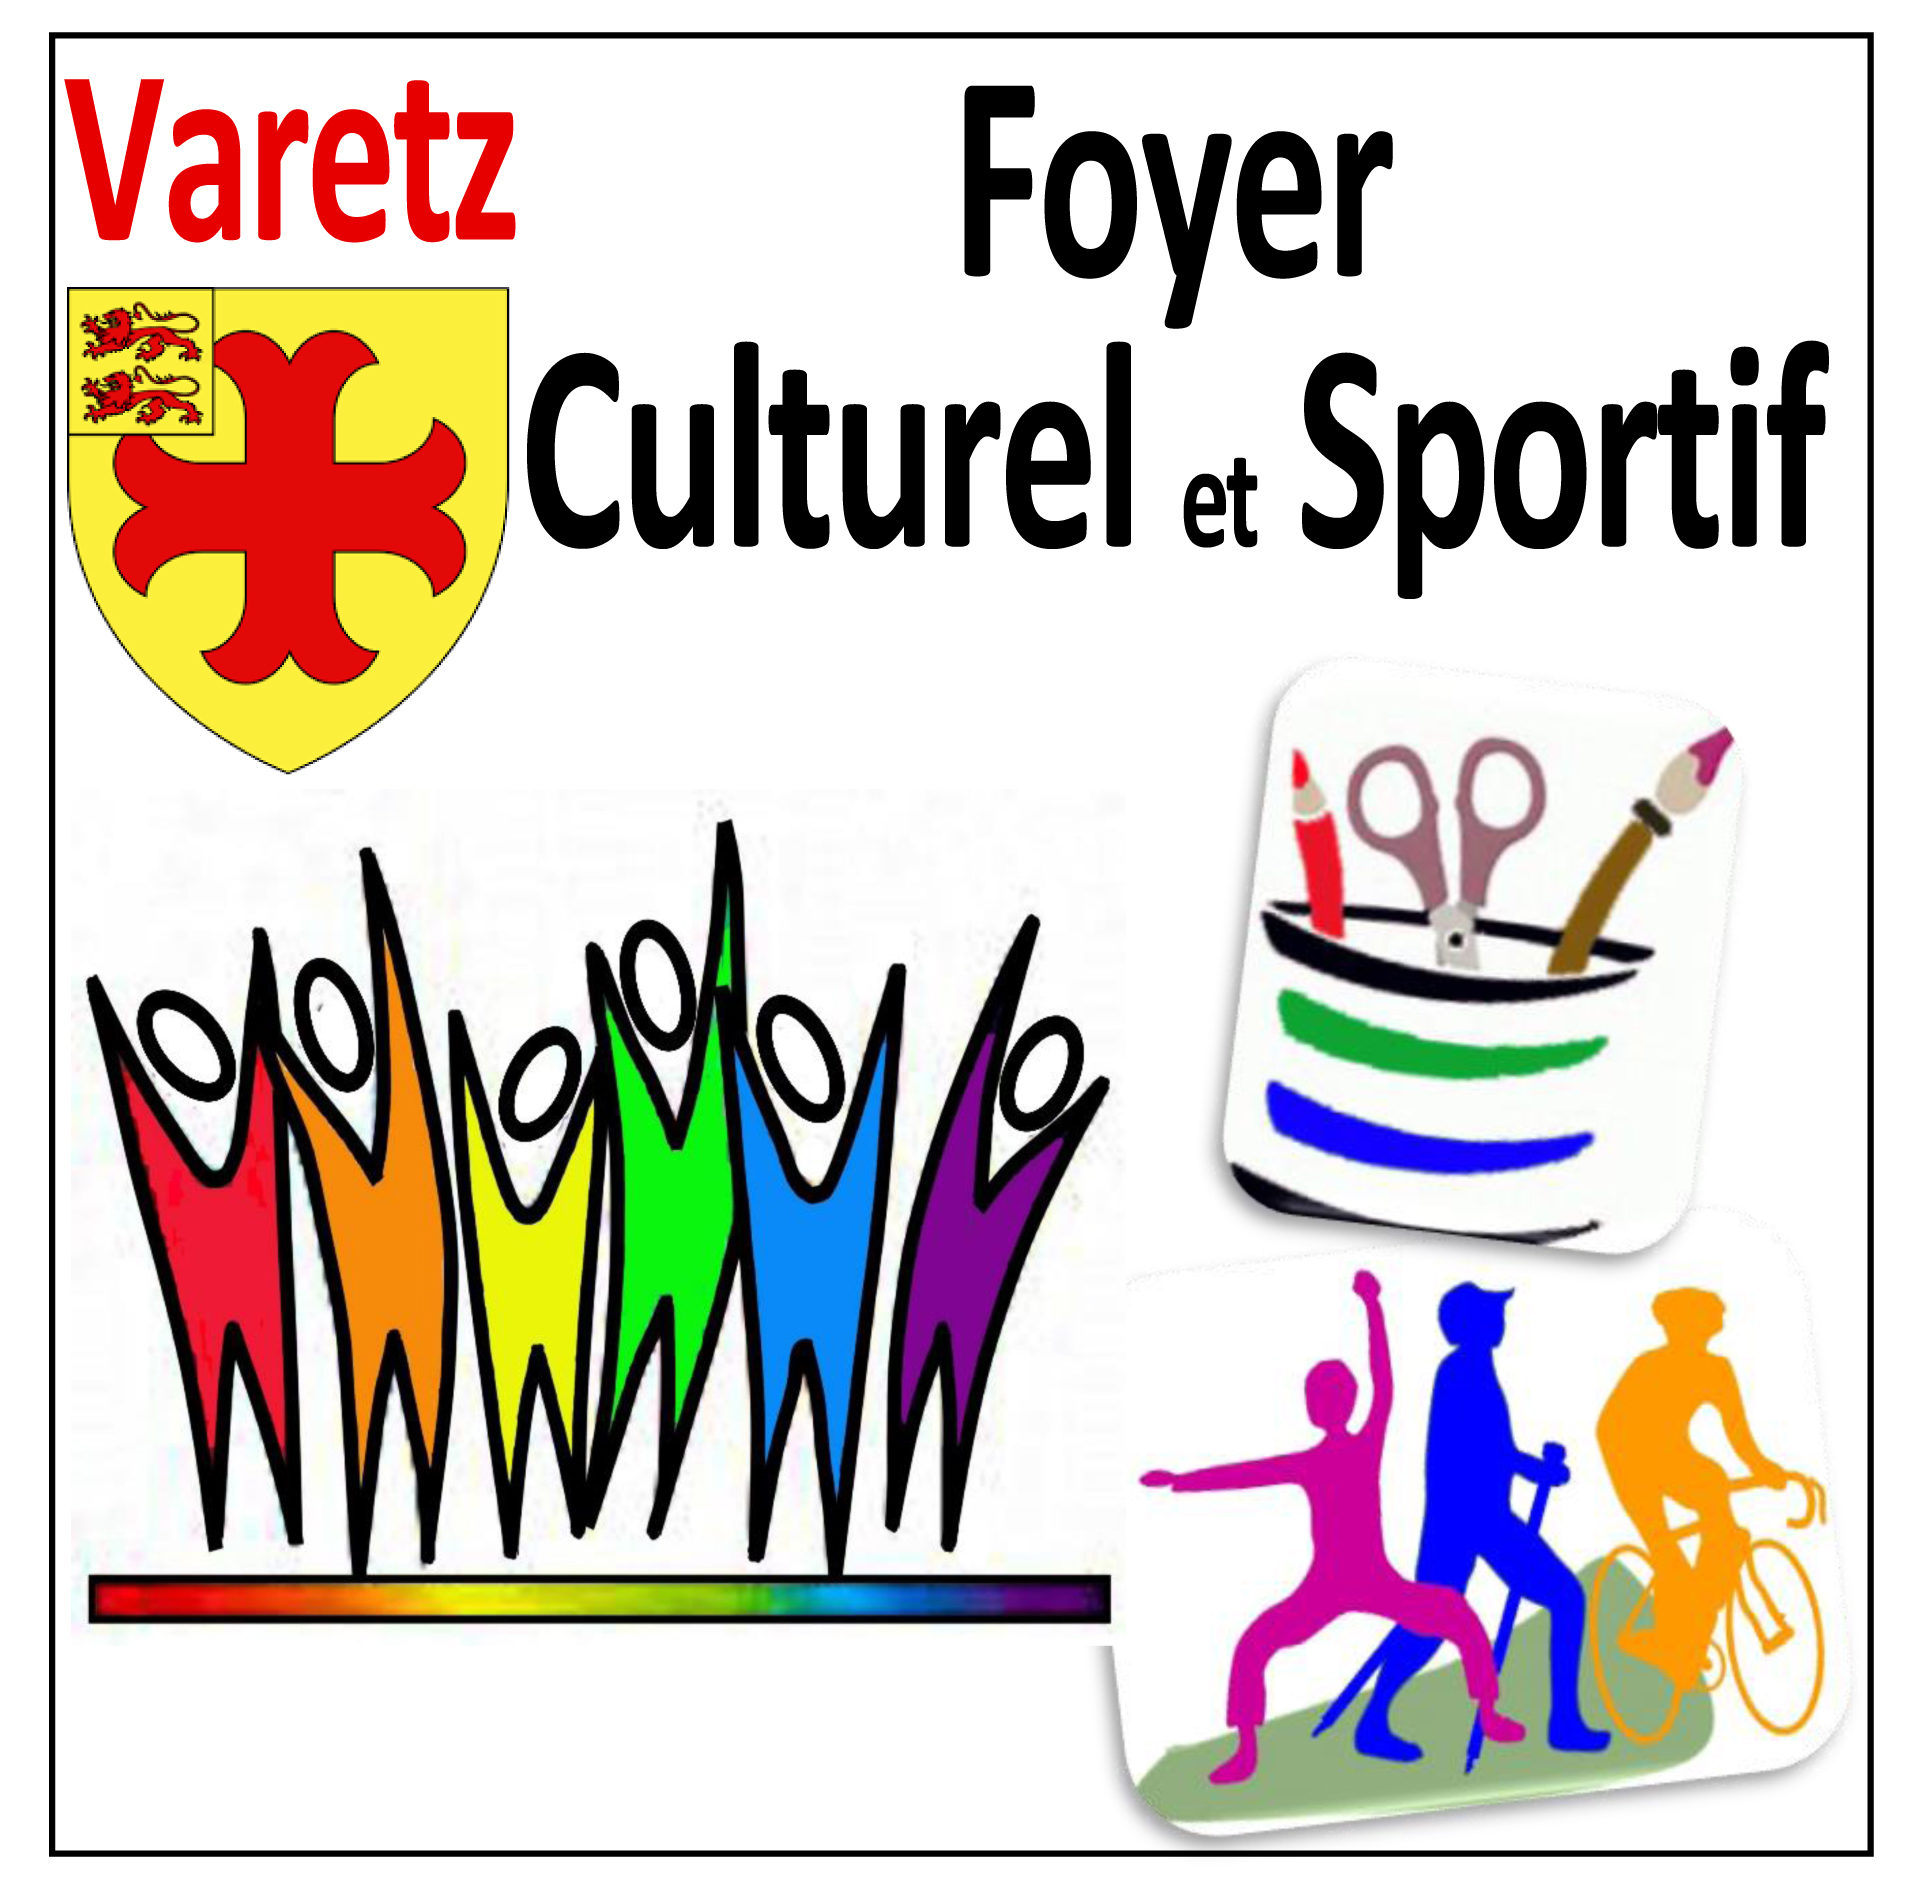 Foyer Culturel et Sportif Varetz